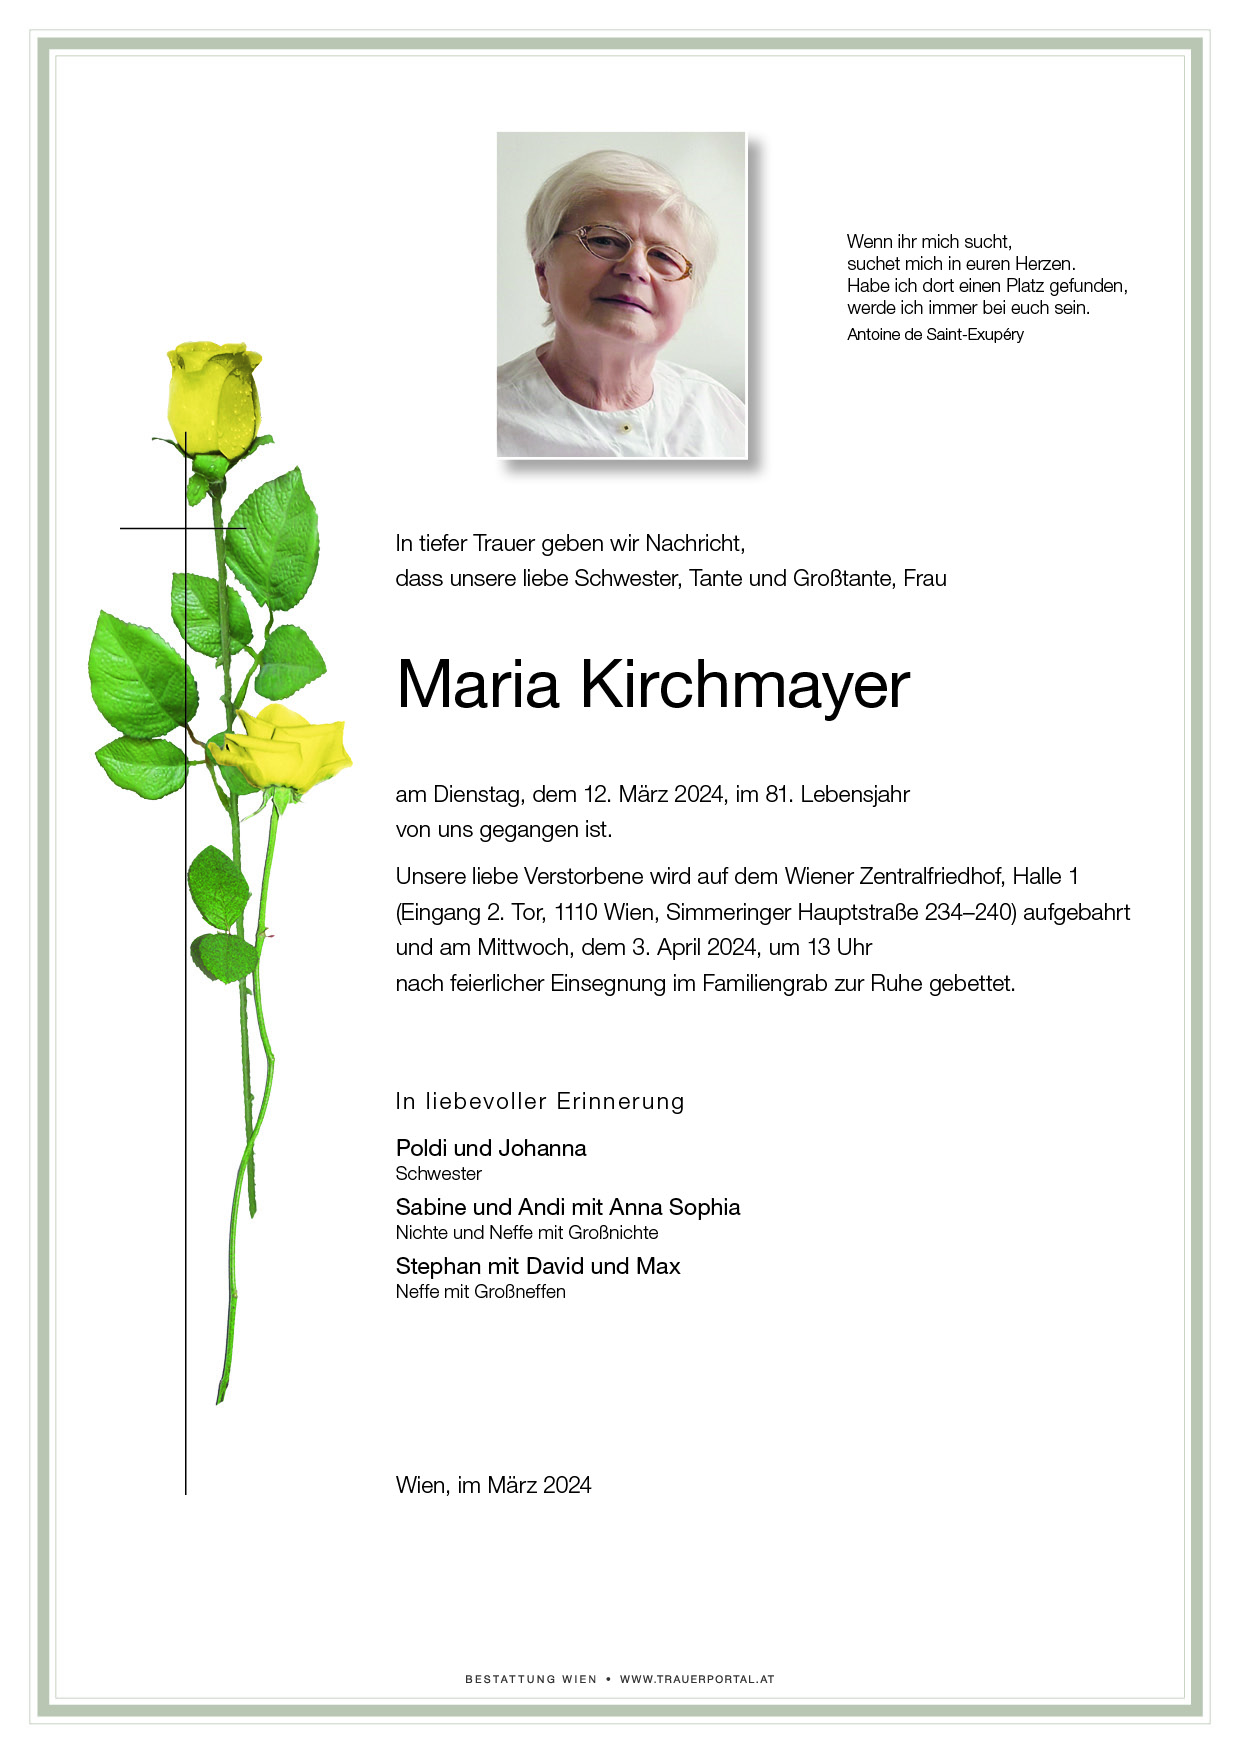 Maria Kirchmayer